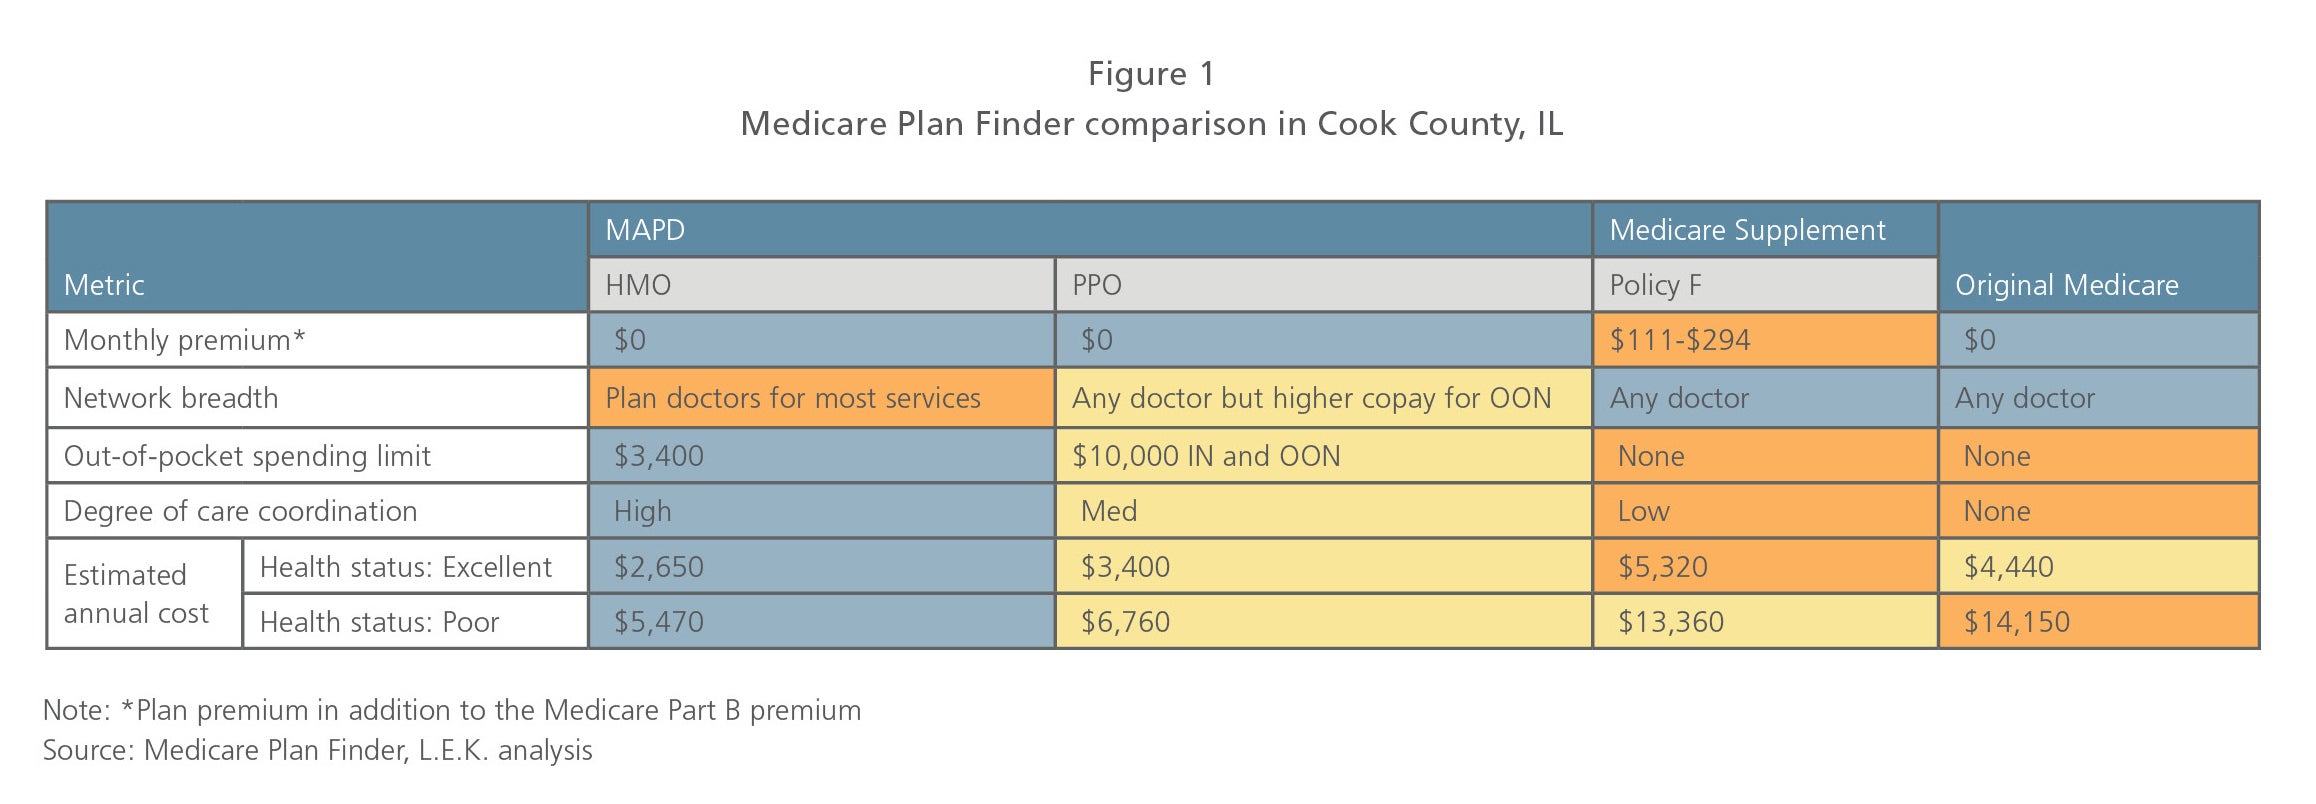 Medicare Plan Finder comparison in Cook County, IL